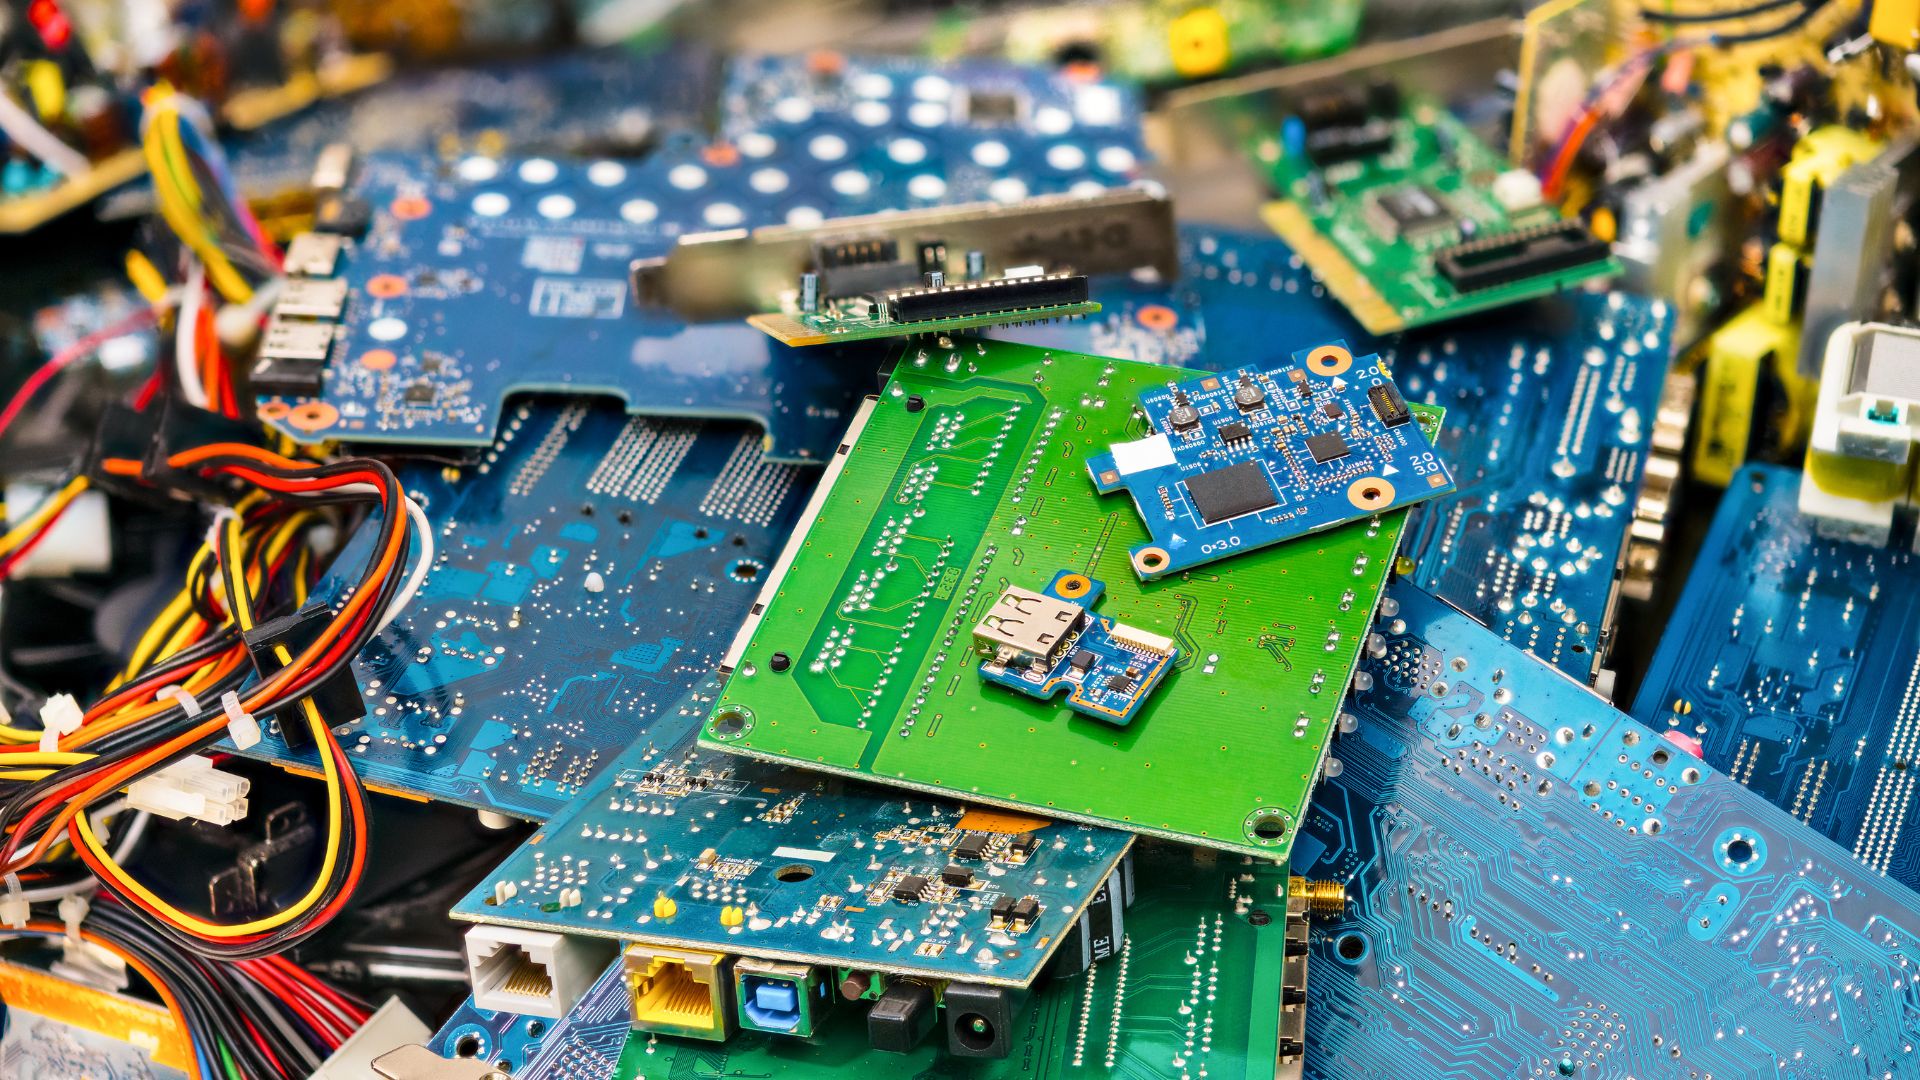 Taking care of electronics waste